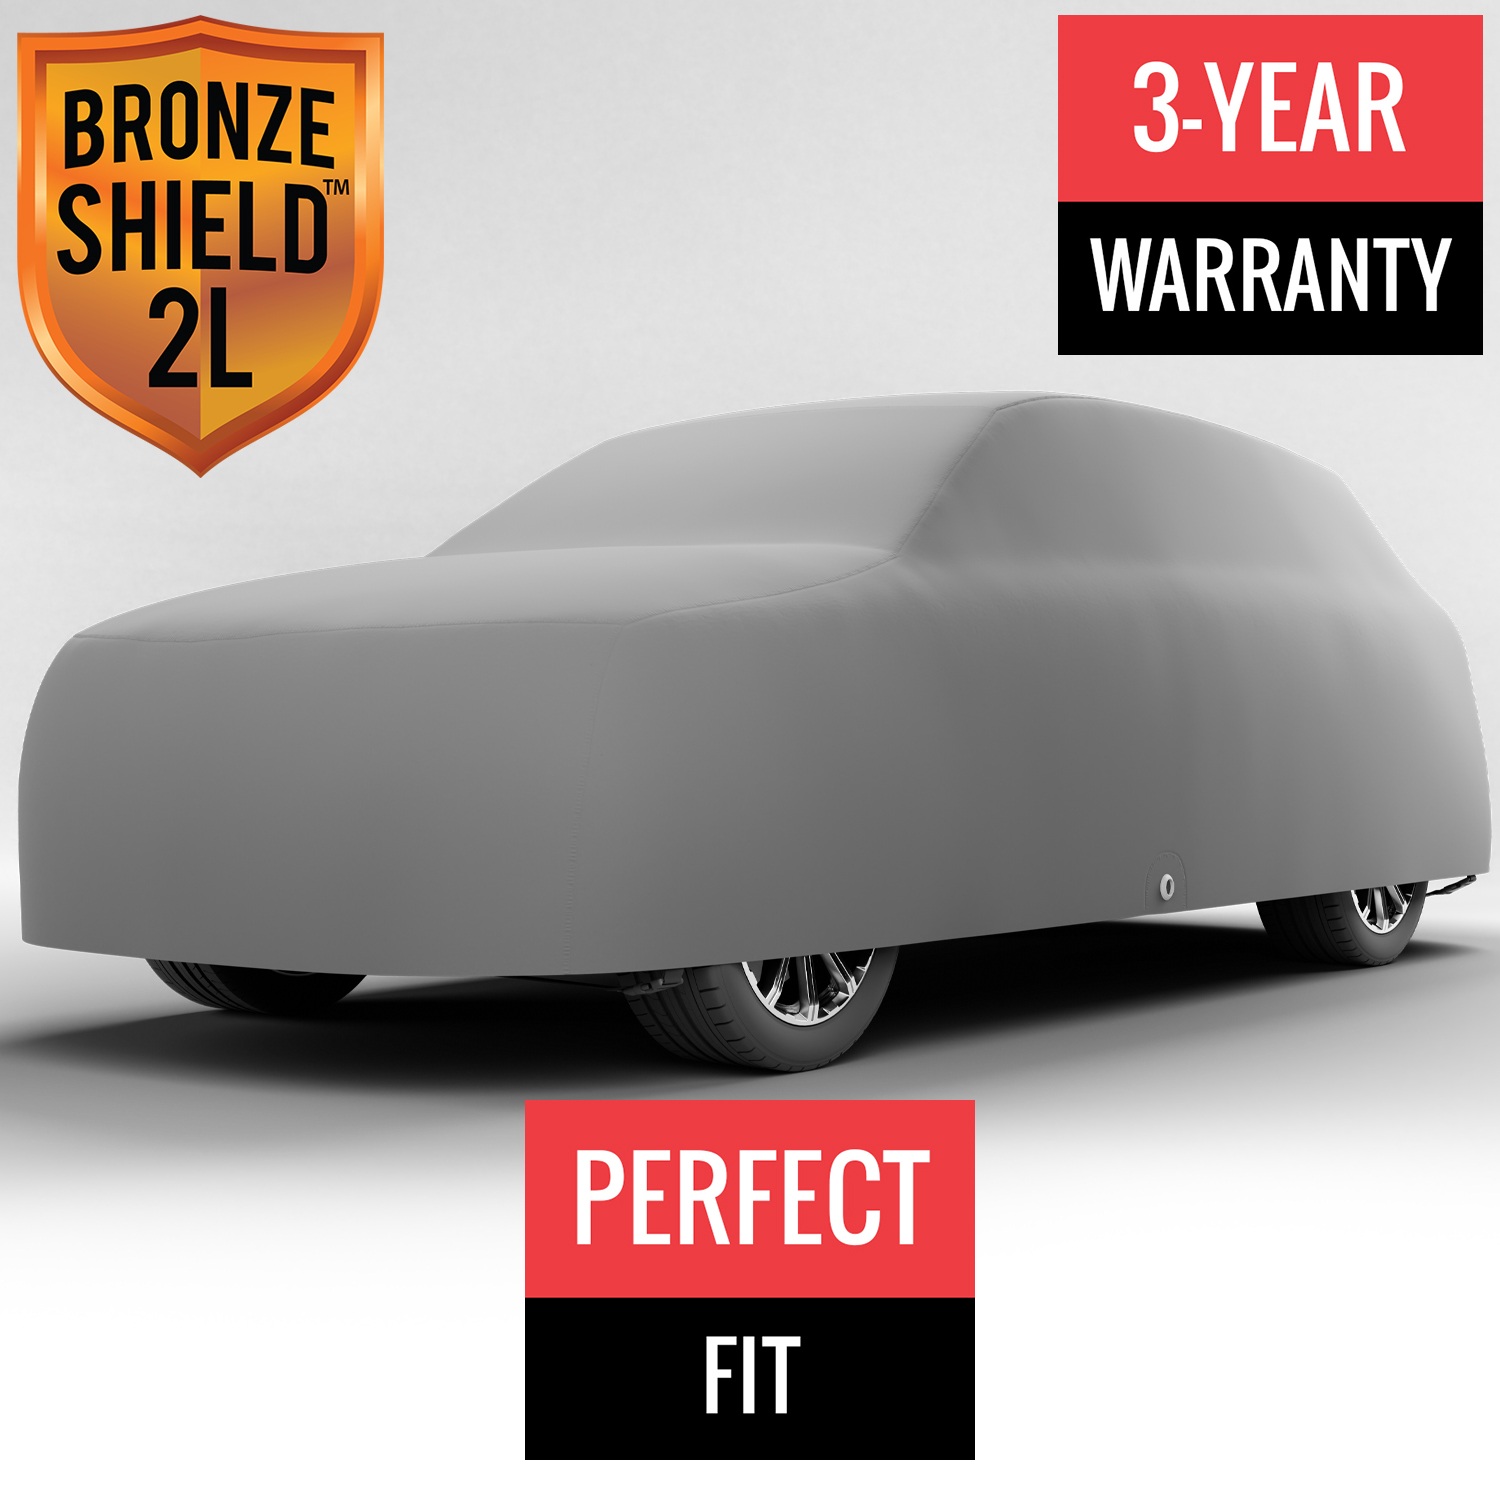 Bronze Shield 2L - Car Cover for Hyundai Palisade 2020 SUV 4-Door